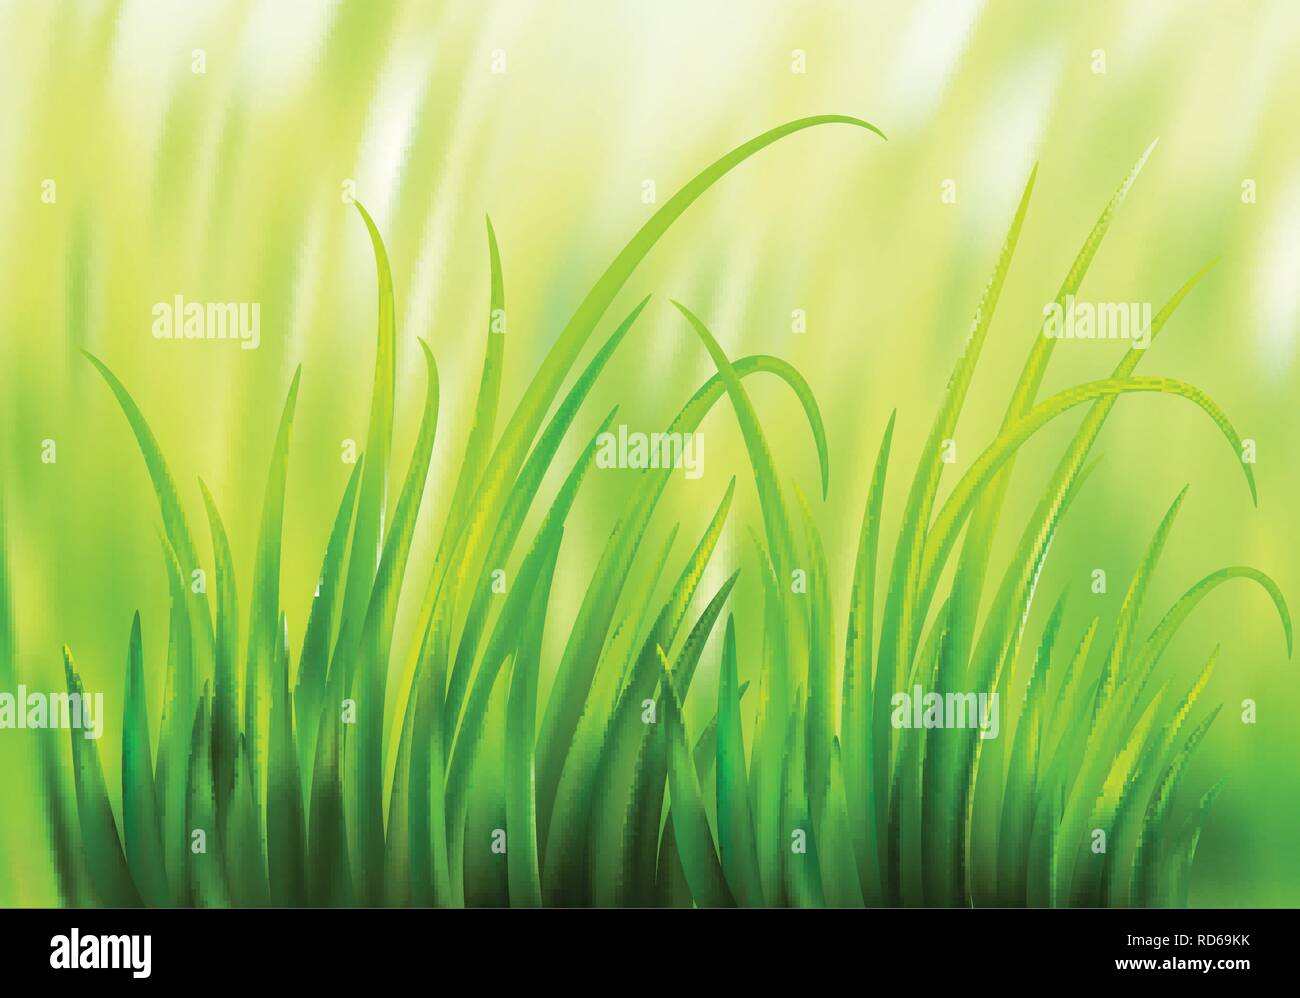 Molla Frash erba verde dello sfondo. Illustrazione Vettoriale Illustrazione Vettoriale